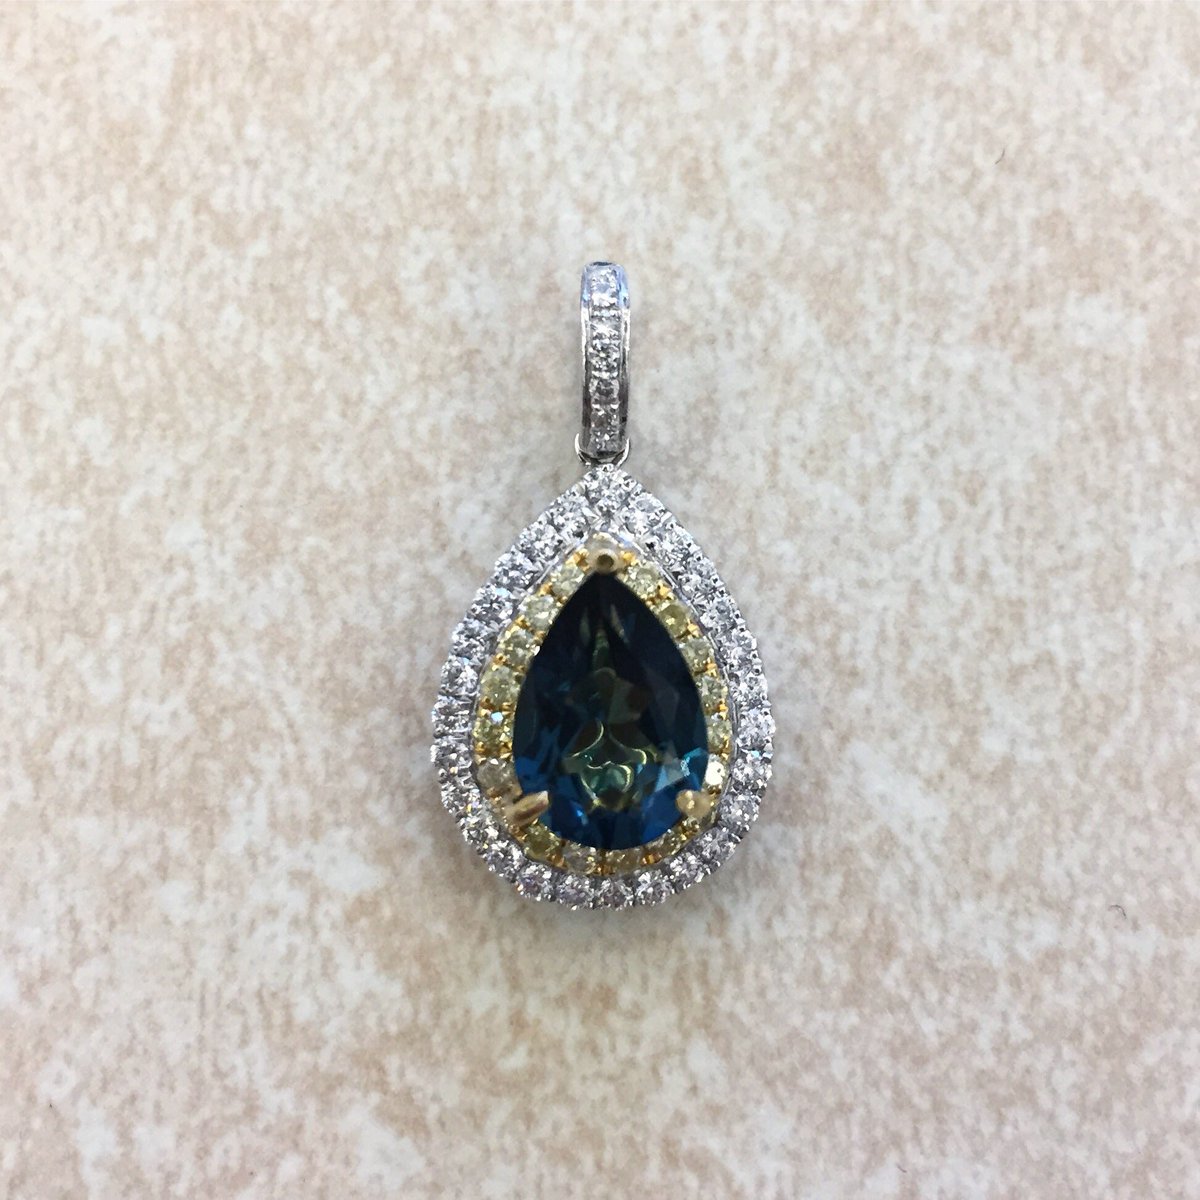 50% OFF! Our Semi Annual Sale is happening NOW ✨ #hhjewelrydesign #bluetopaz #londonbluetopaz #blue #naturalyellowdiamond #whitediamond #diamond #diamonds #pendant #necklace #finejewelry #jewelry